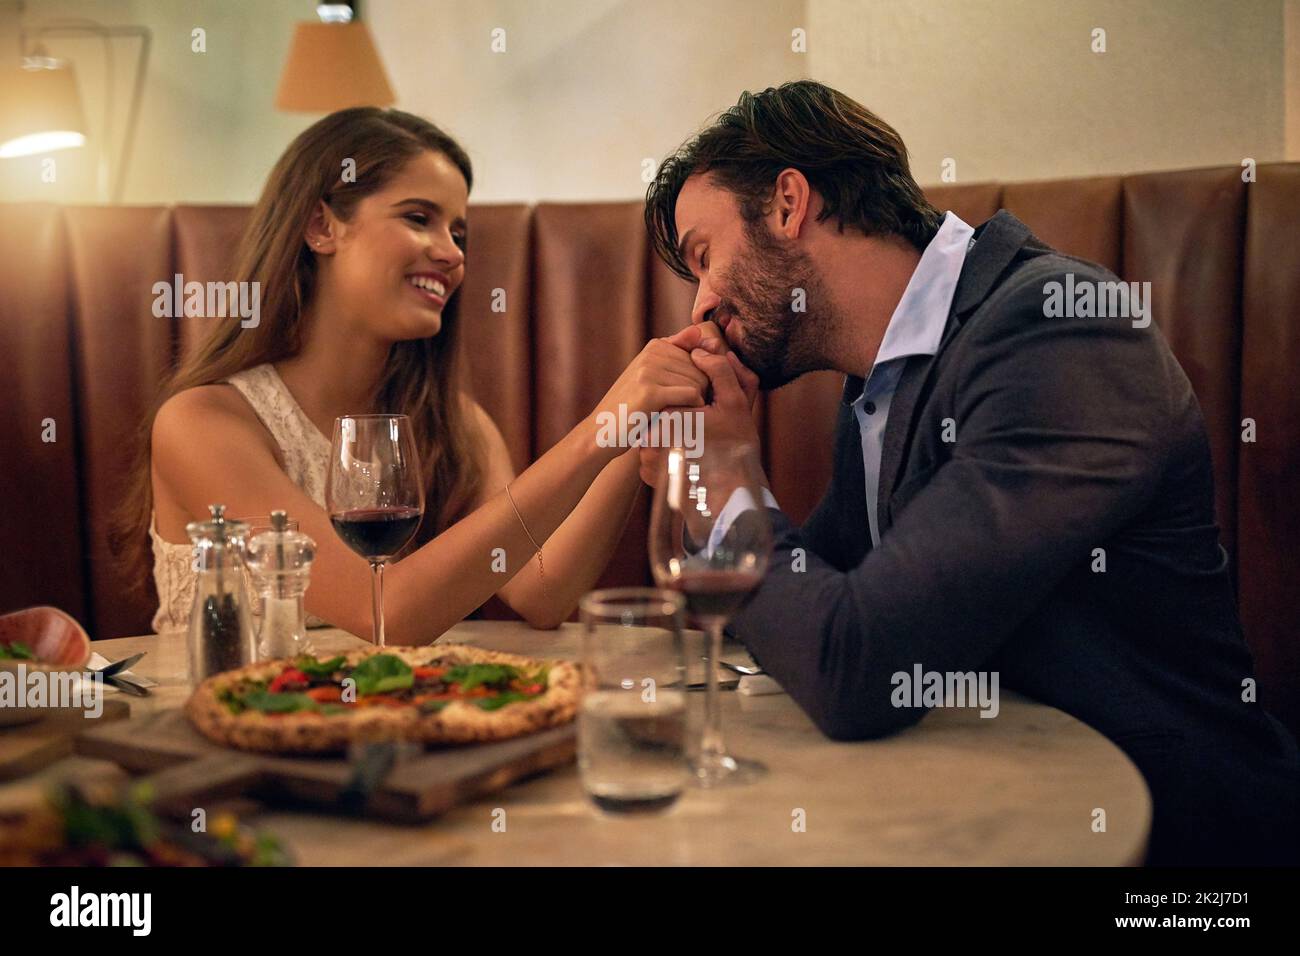 Romance level Expert. Shot of an affectionate young couple enjoying a romantic dinner date at a restaurant. Stock Photo